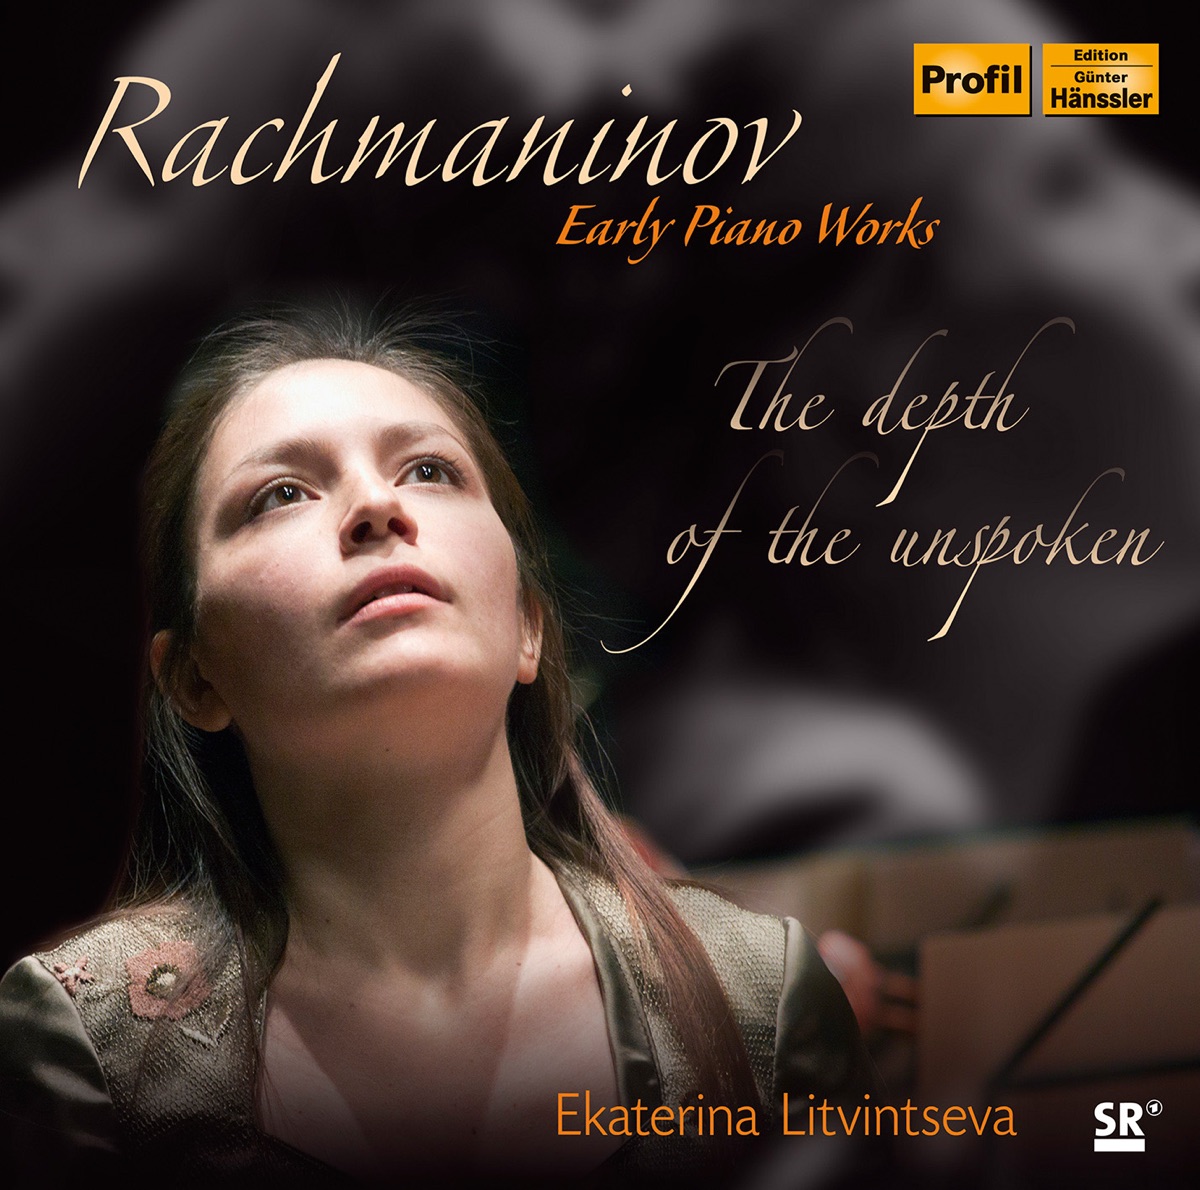 Rachmaninov: Early Piano Works by Ekaterina Litvintseva on Apple Music